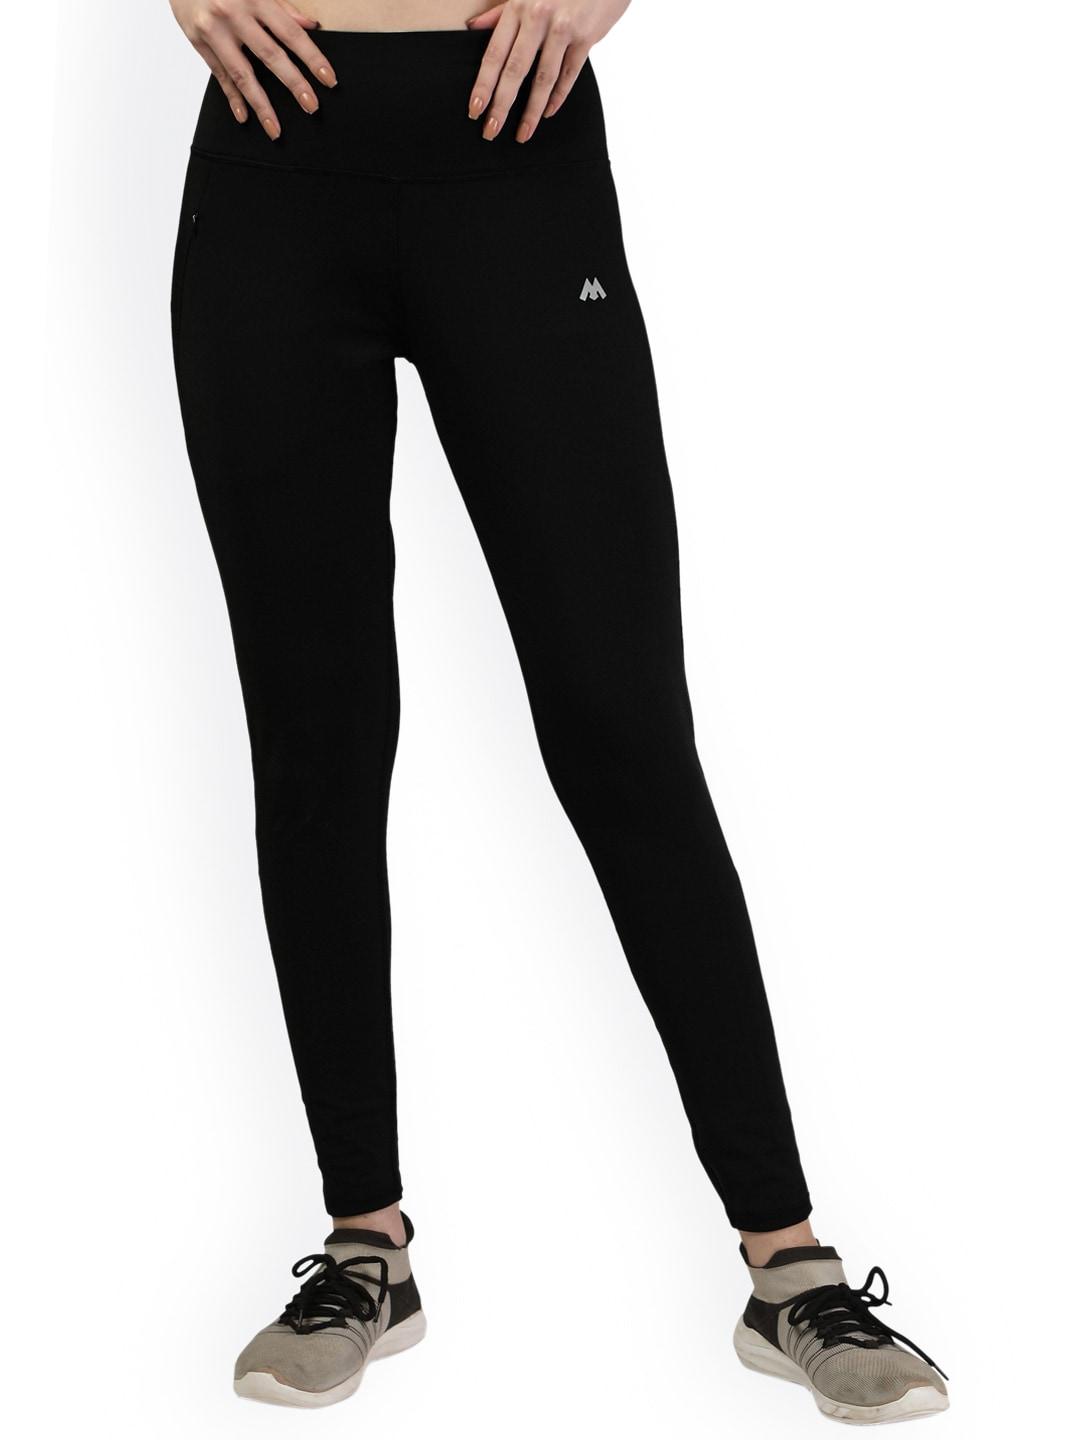 Civamee Women Logo Printed Detail Slim Fit Yoga Track Pants